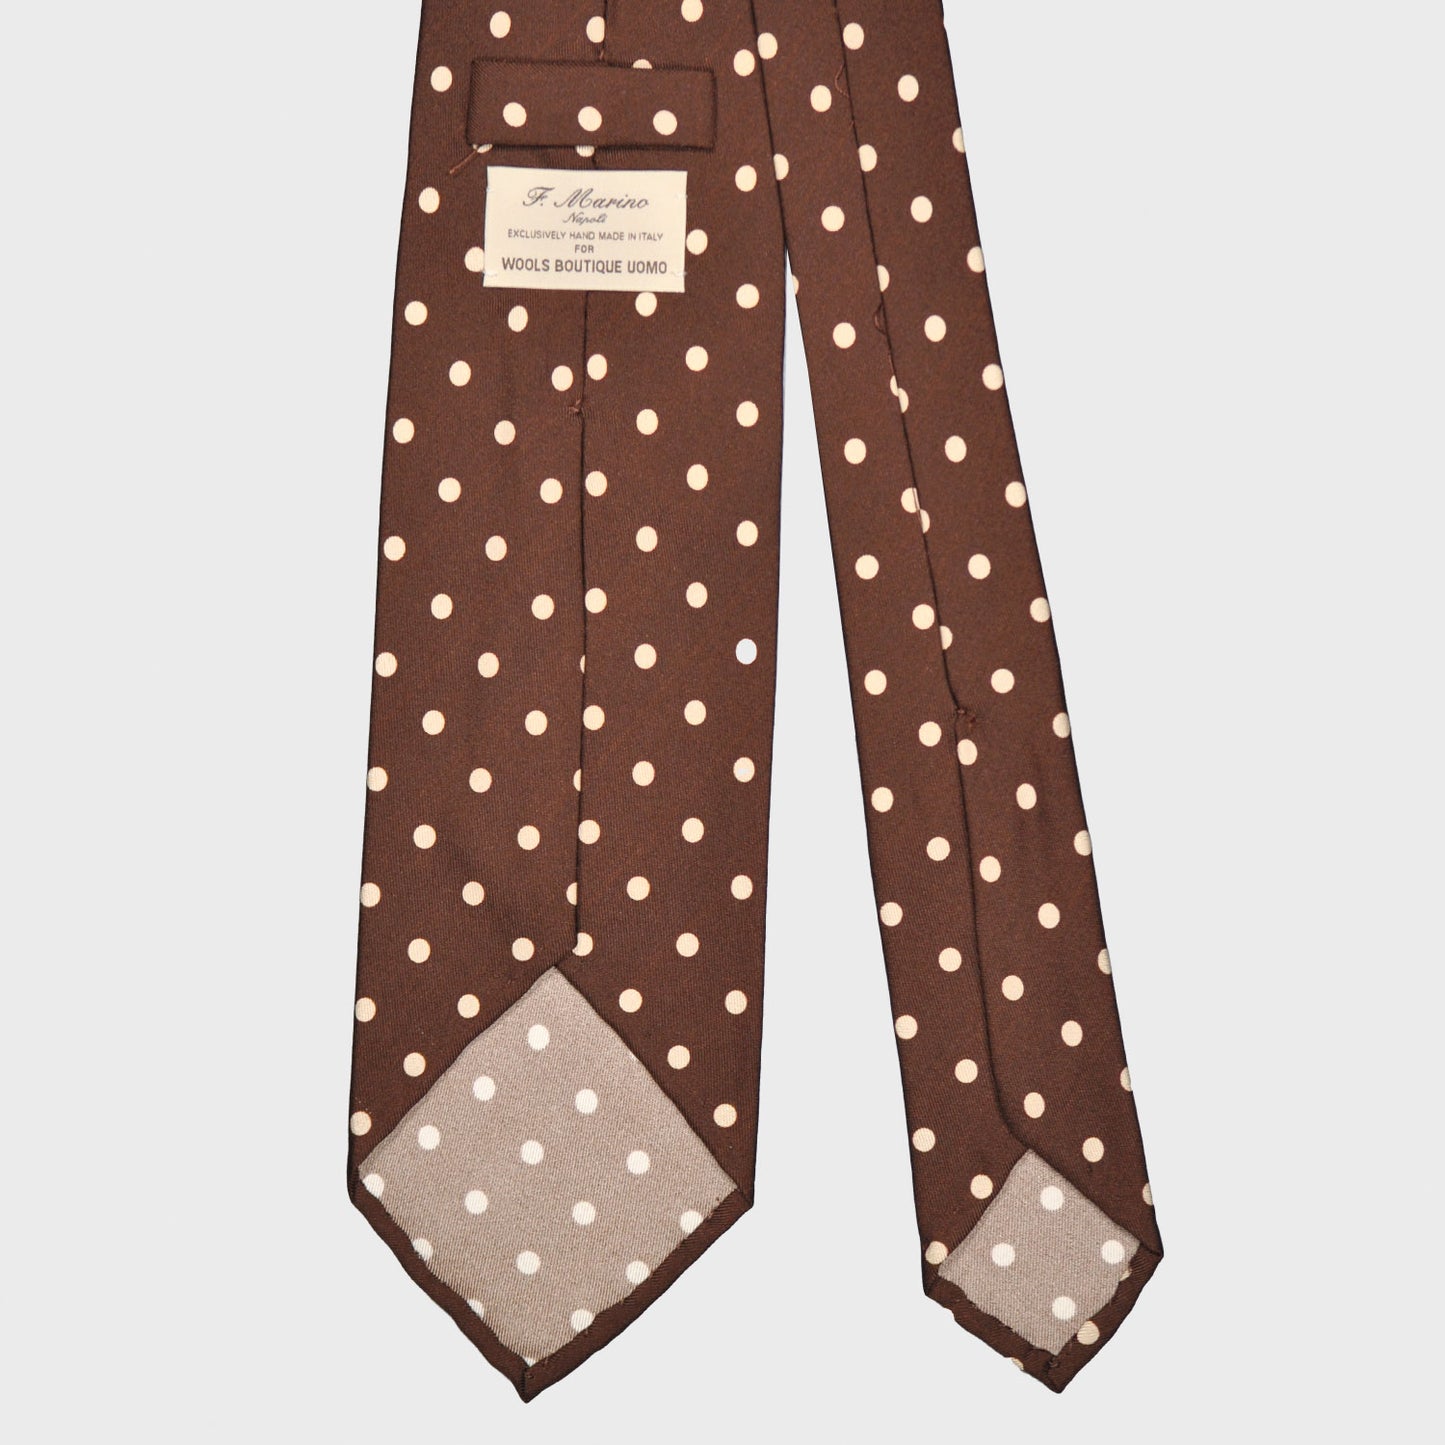 F.Marino Silk Tie 3 Folds Pois Coffee Brown-Wools Boutique Uomo